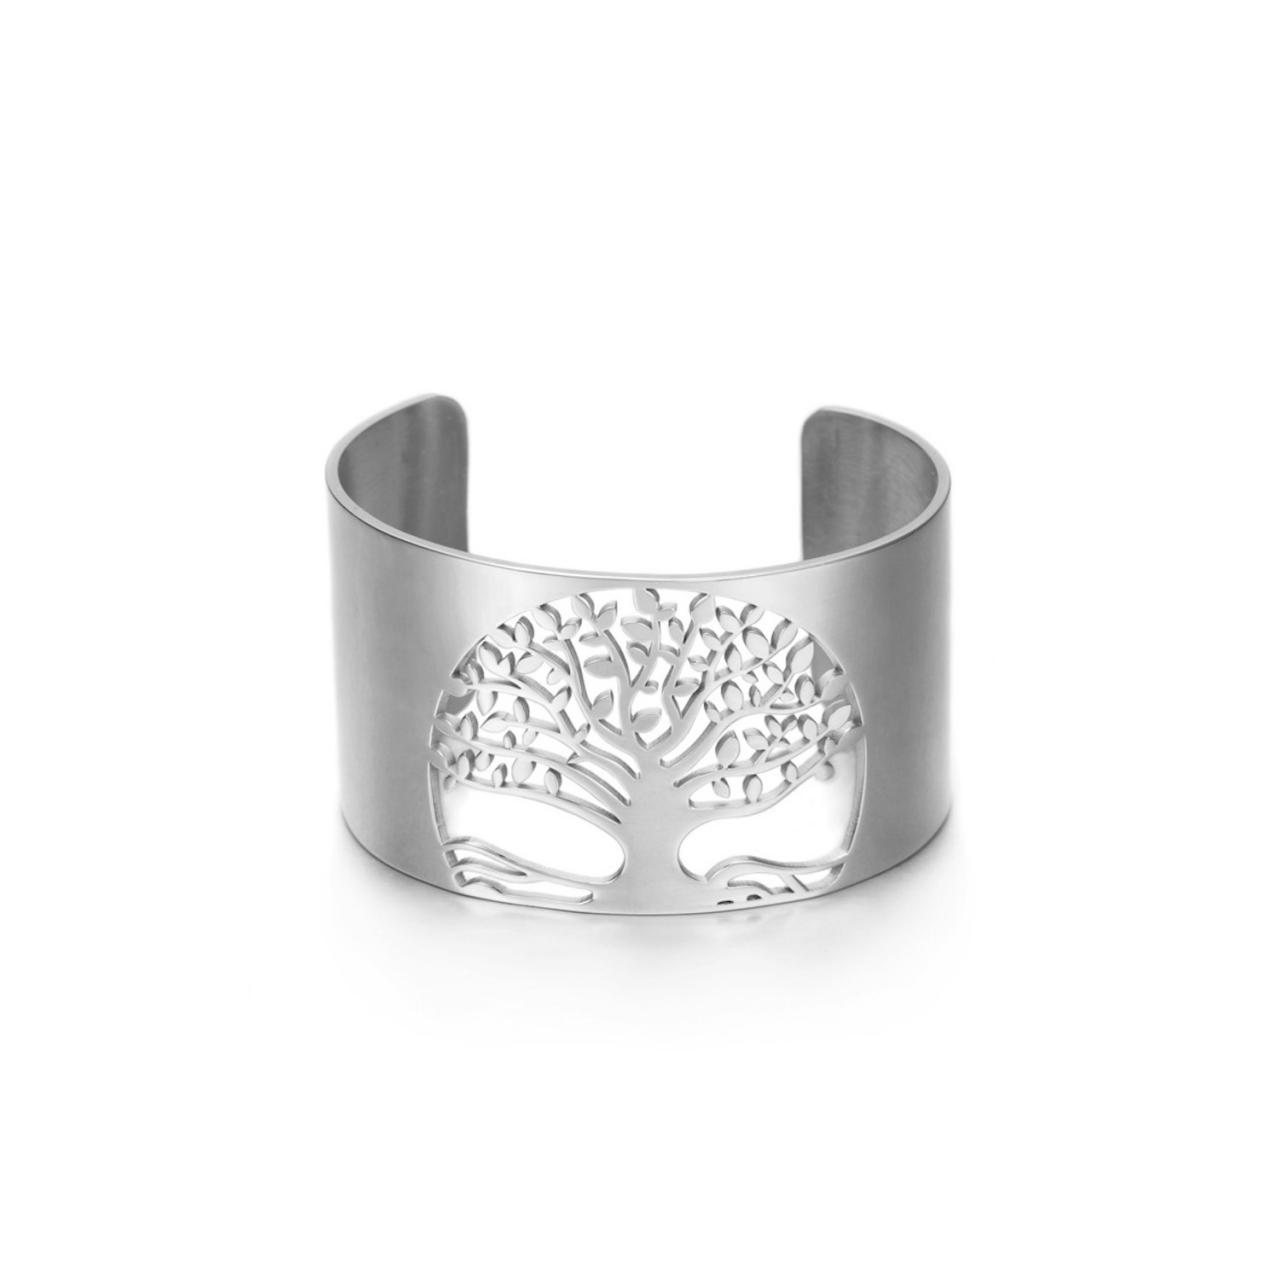 Tree Of Life Bracelet / Silver Cuff / Wide Cuff Bracelet / Cuff Bracelet / Silver Bracelet / Thick Bracelet / Boho Jewelry / Open Cuff